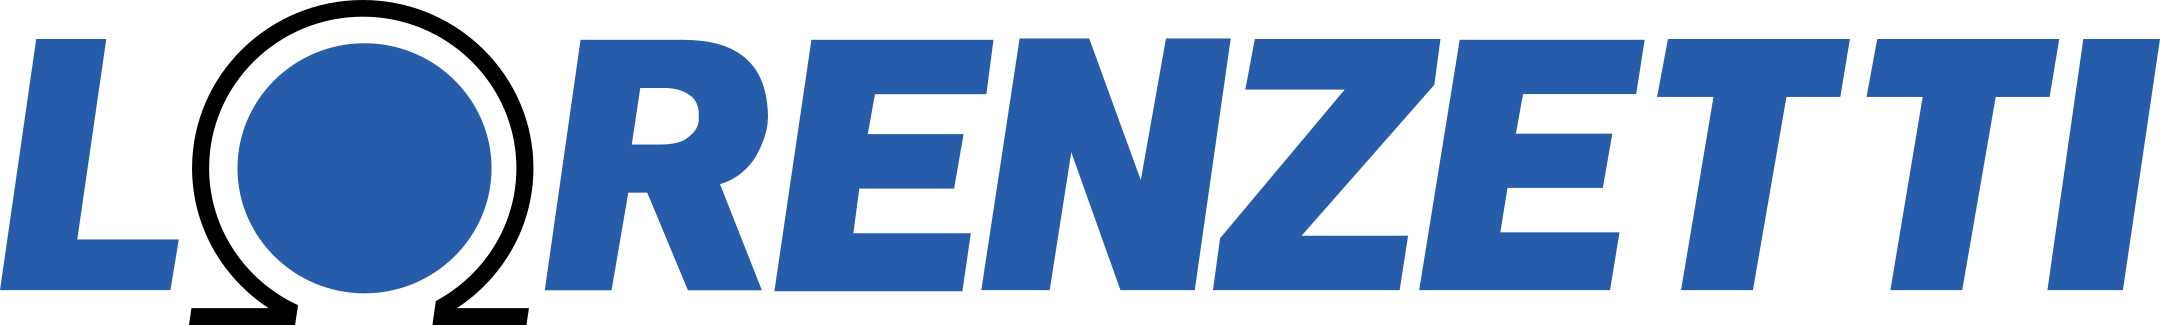 lorentti-logo-1